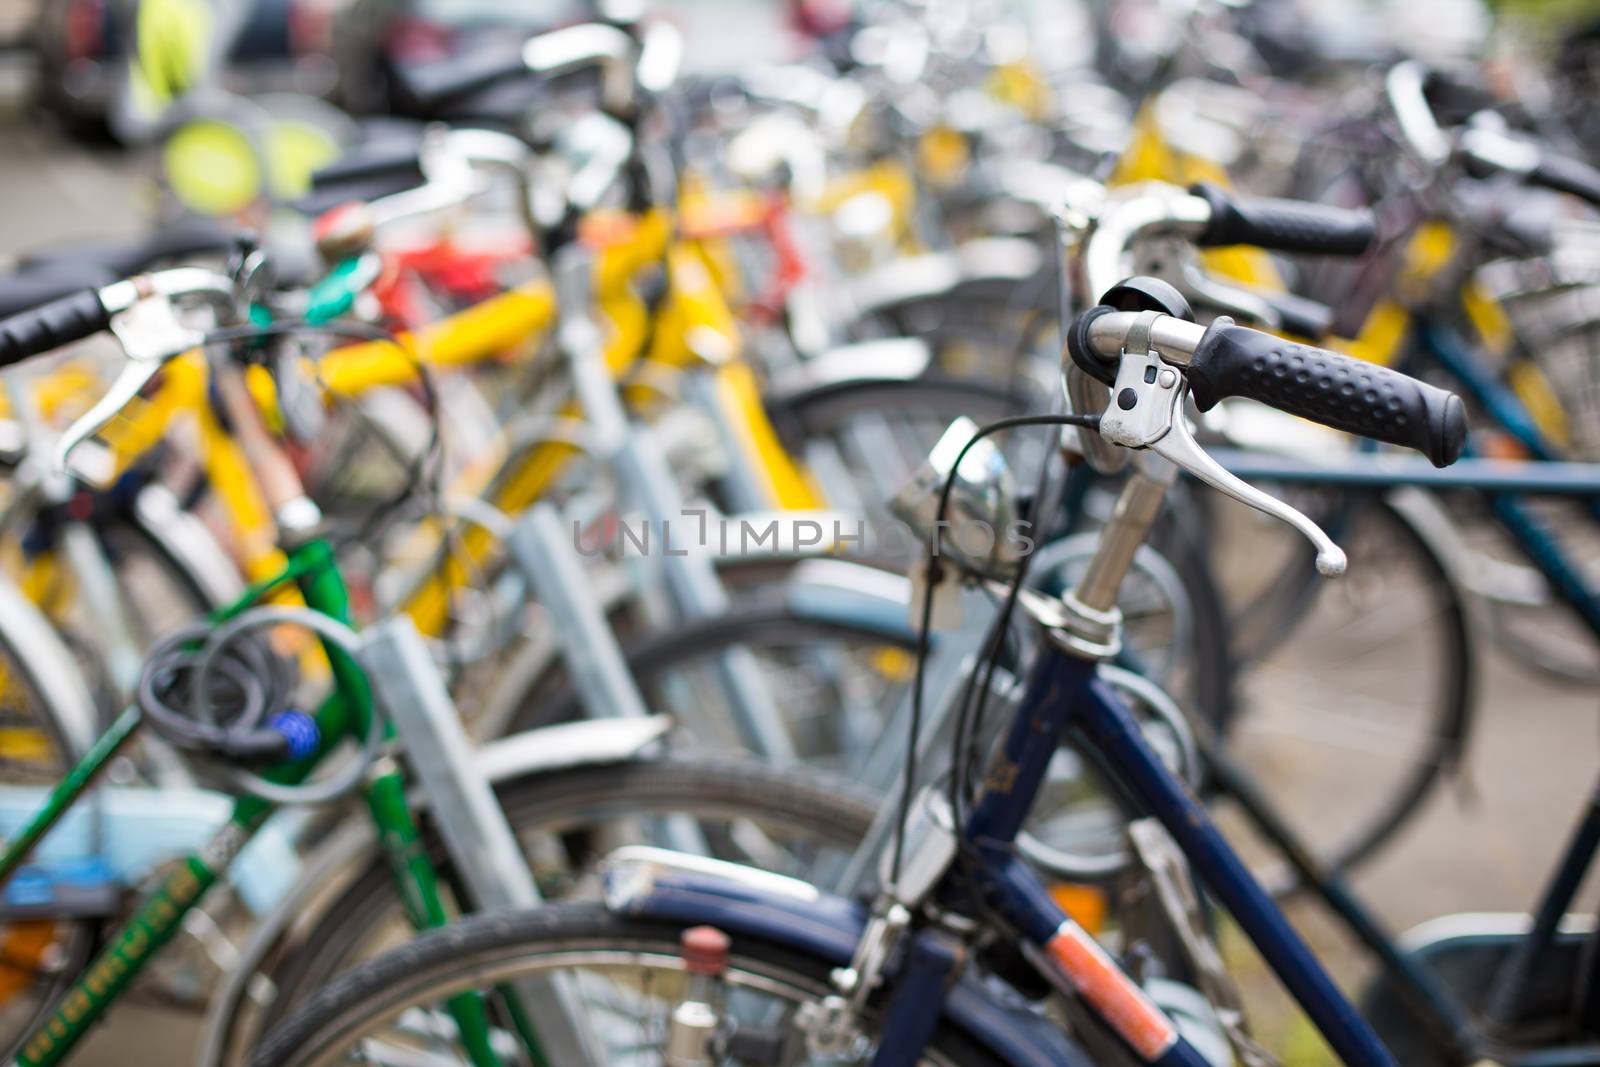 Bike rental service/Many bikes in a city context by viktor_cap